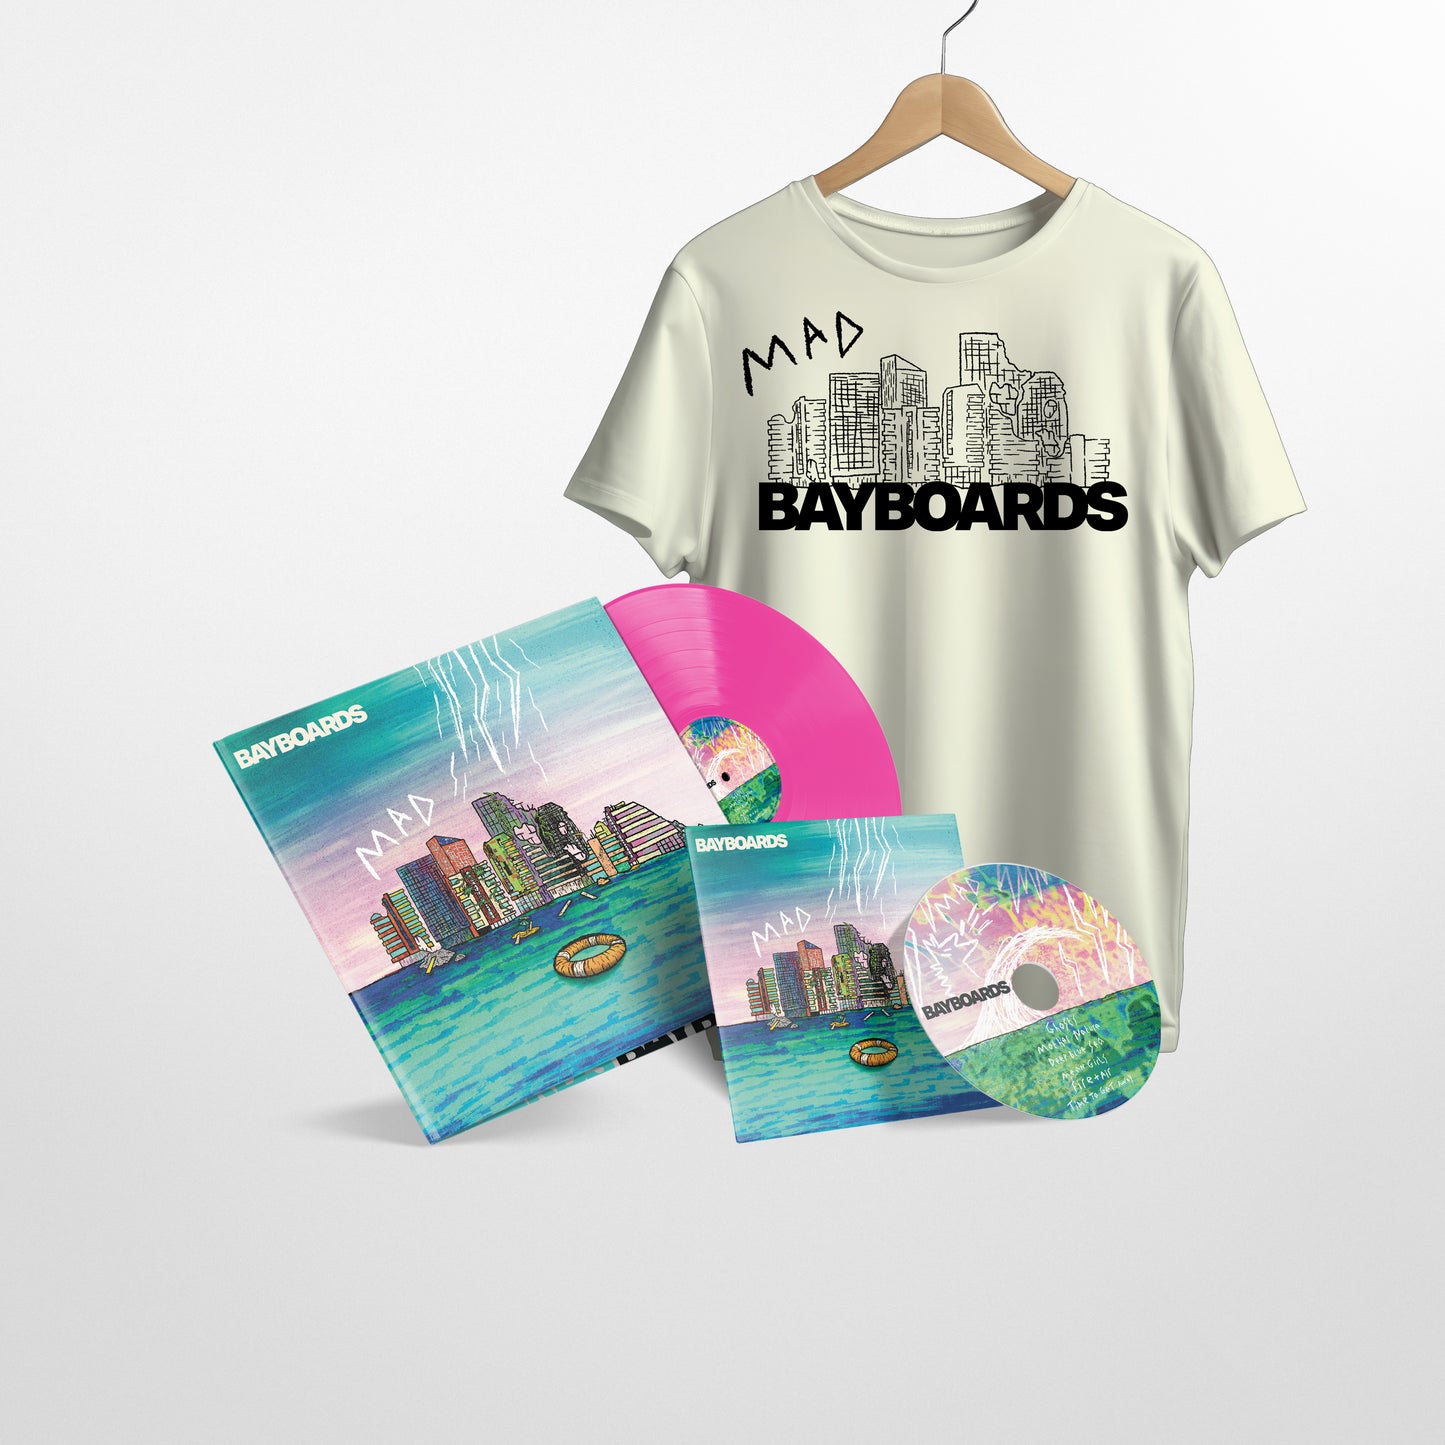 Bayboards - 'Modern Age Disaster' EP - Bundle - Pink 12" Vinyl Disc + CD + T-Shirt